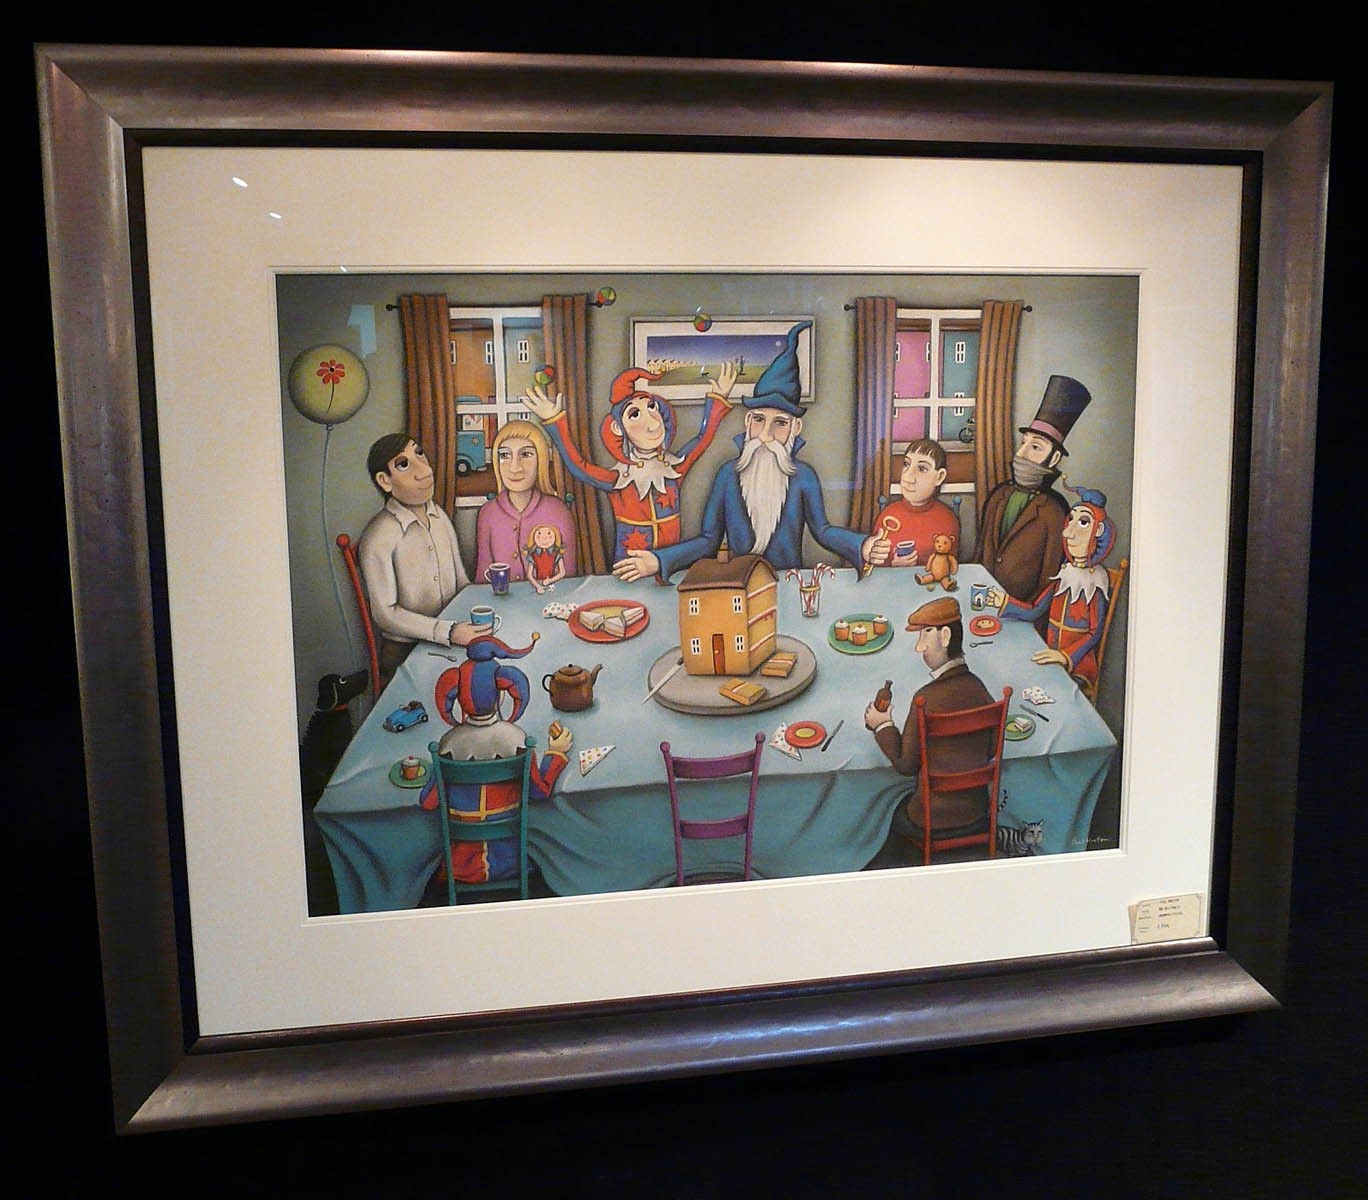 The Tea Party by Paul Horton